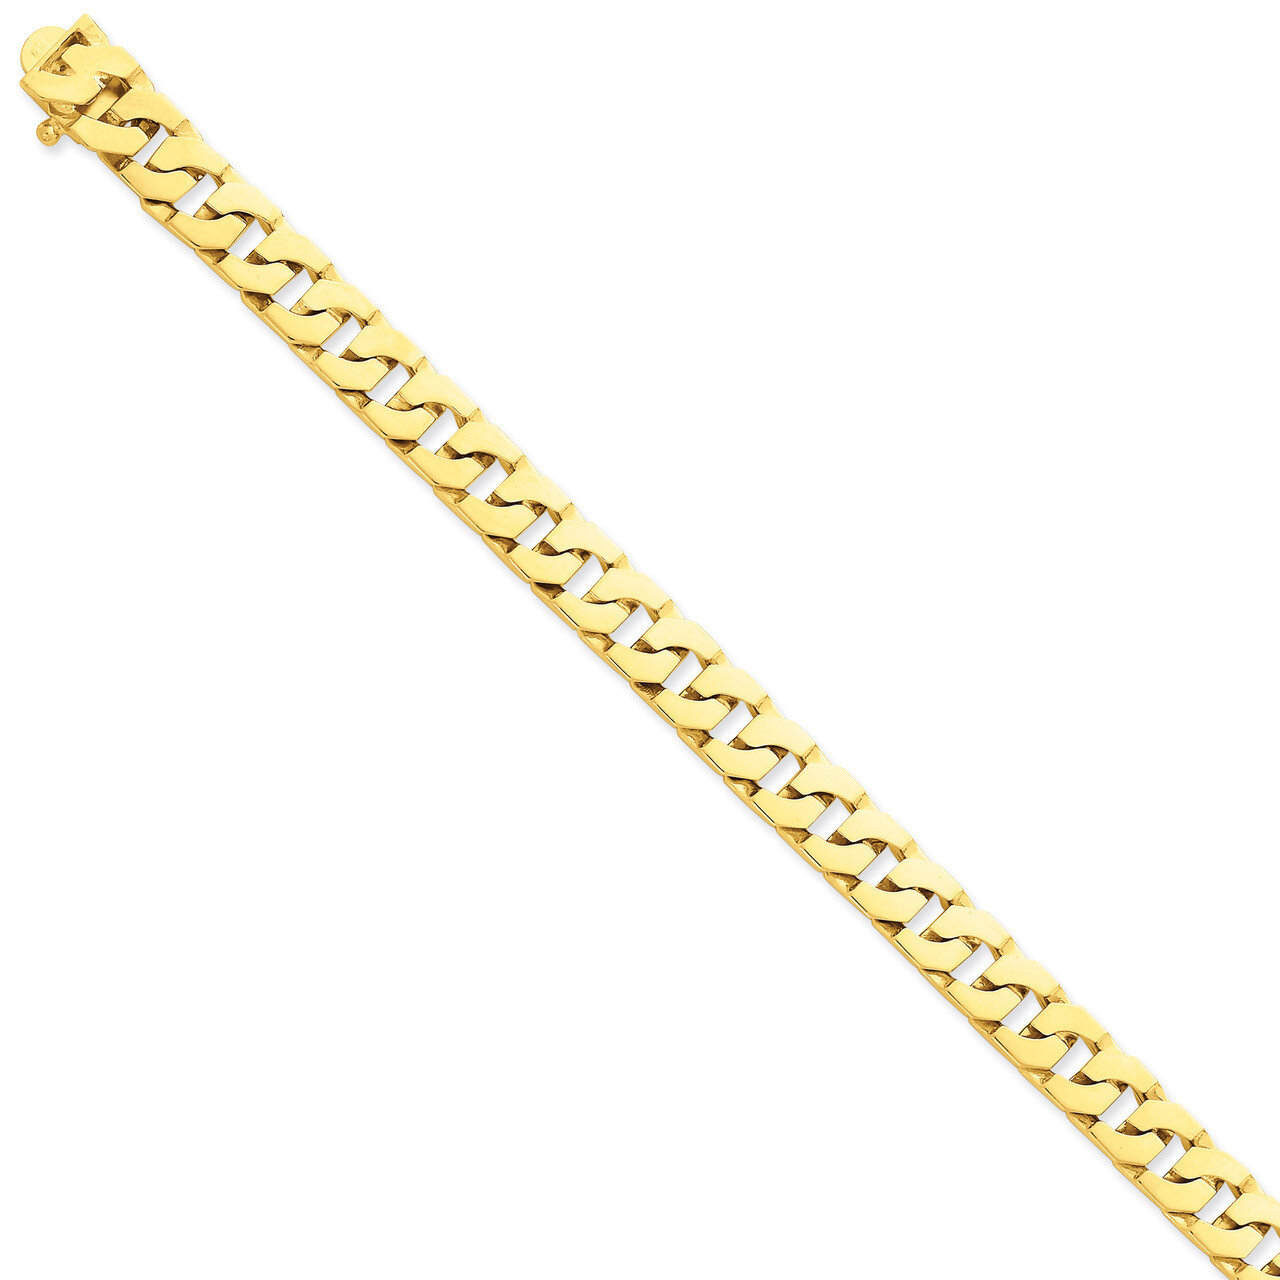 10mm Hand-Polished Fancy Link Chain 24 Inch 14k Gold LK138-24